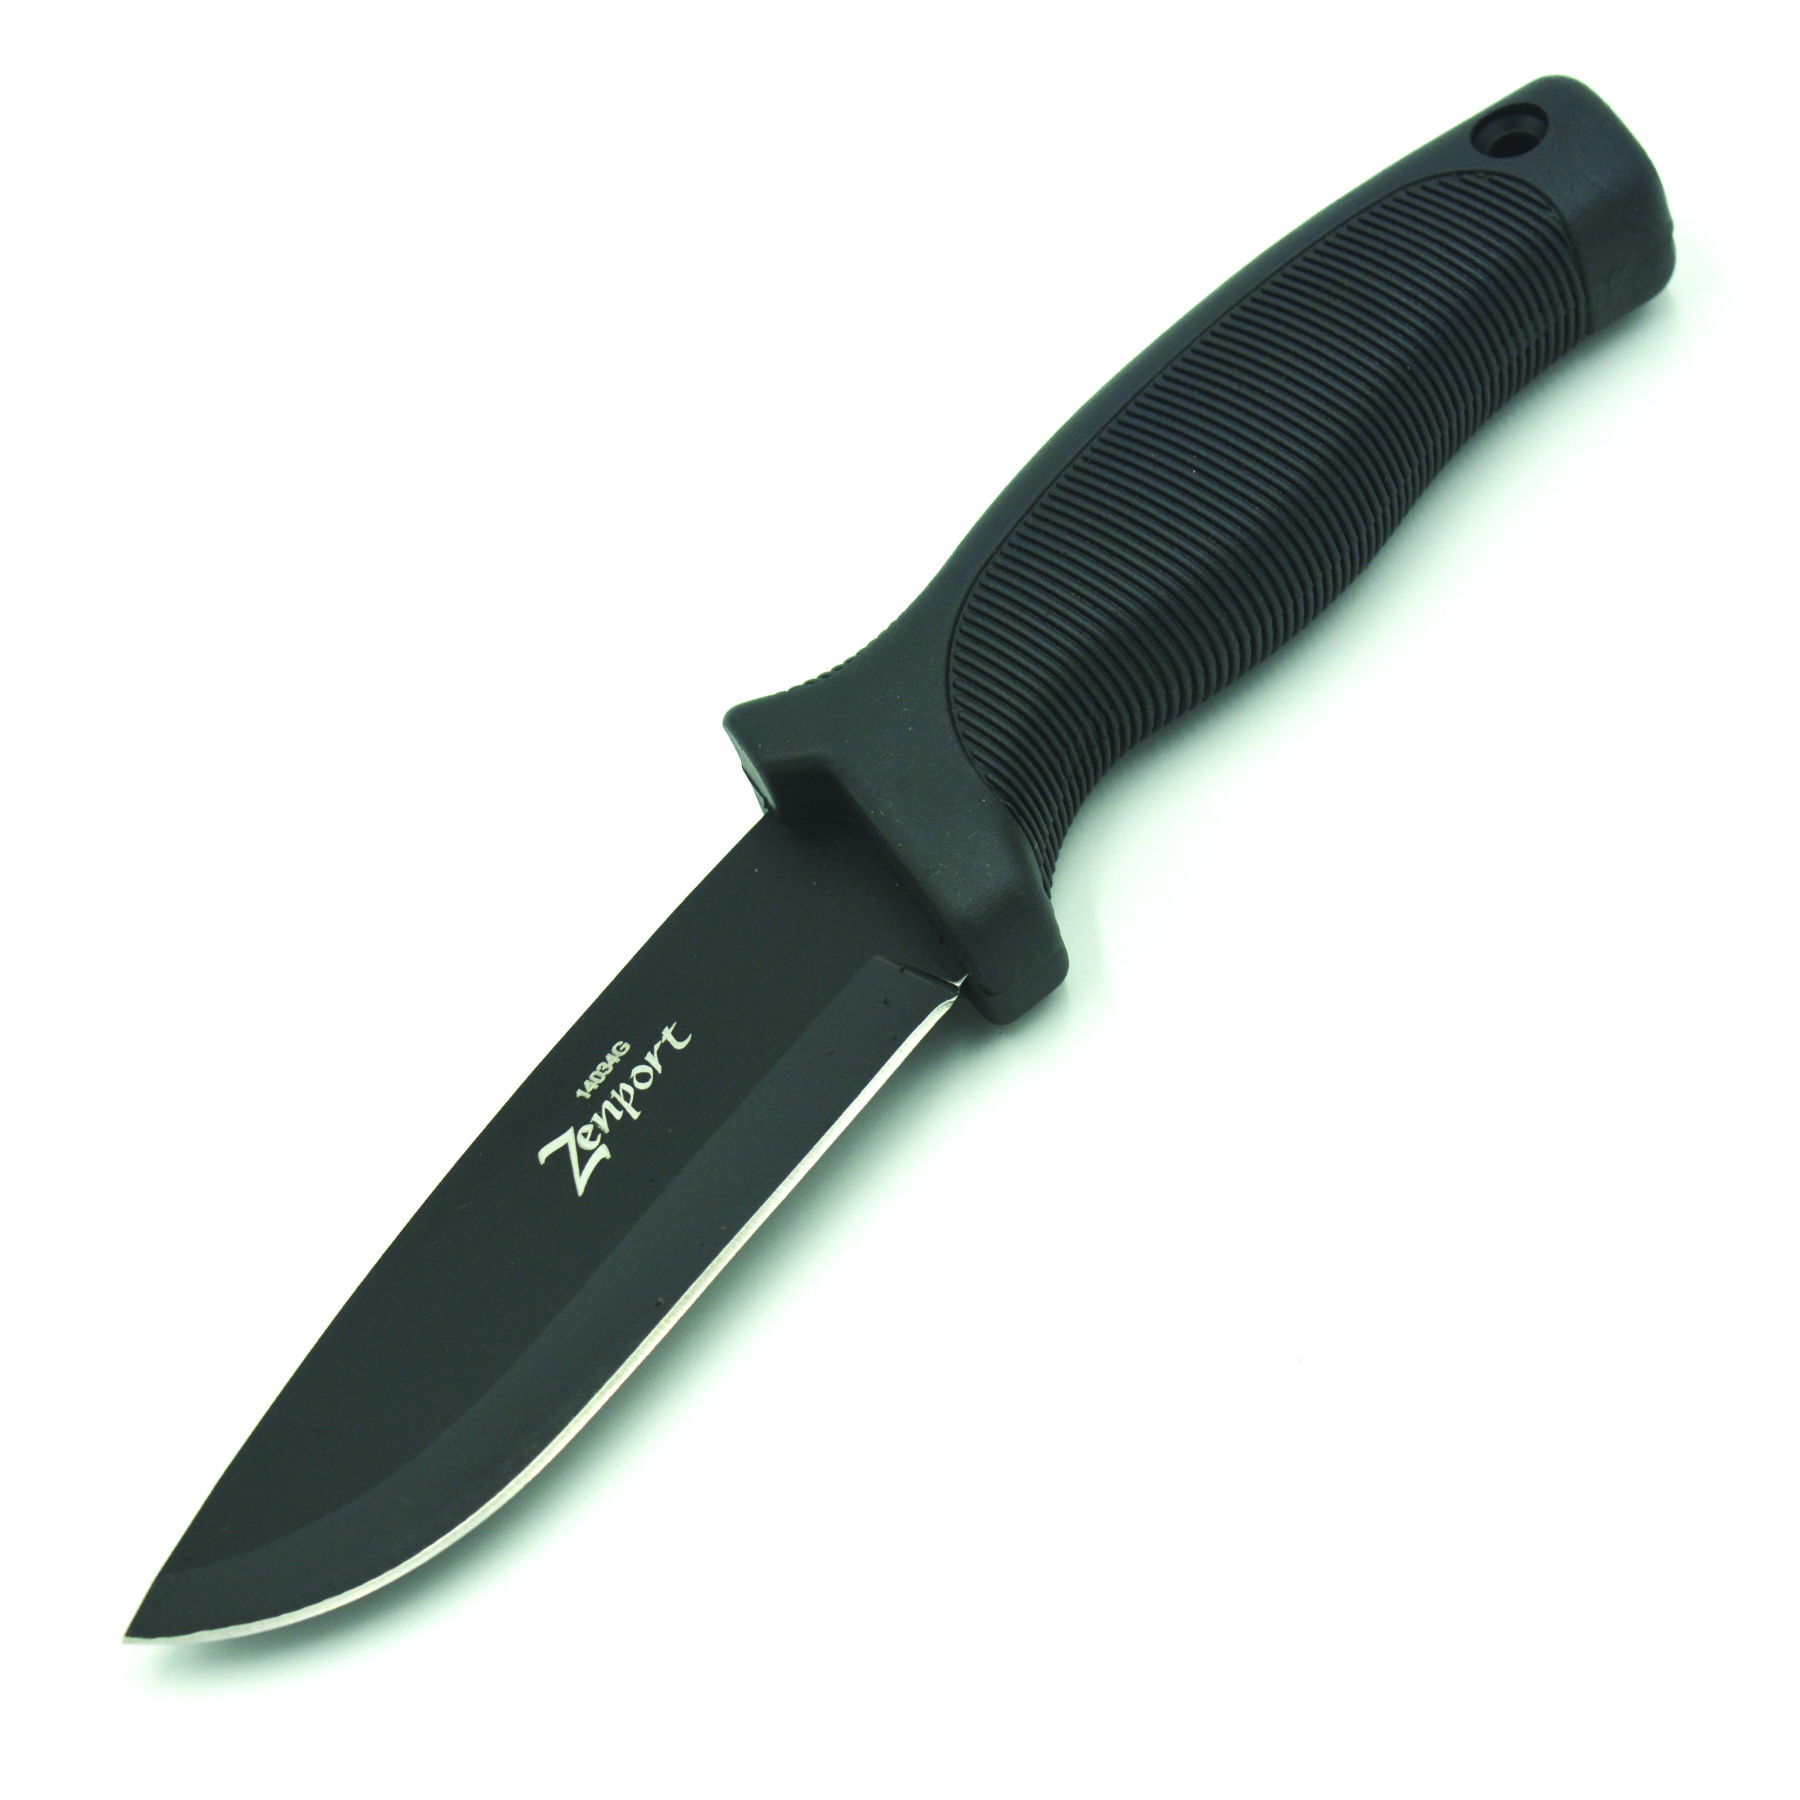 Zenport Hunting Knife 14034G 4.2-Inch 440C Stainless Steel Blade, Sheath, 9-Inch Long